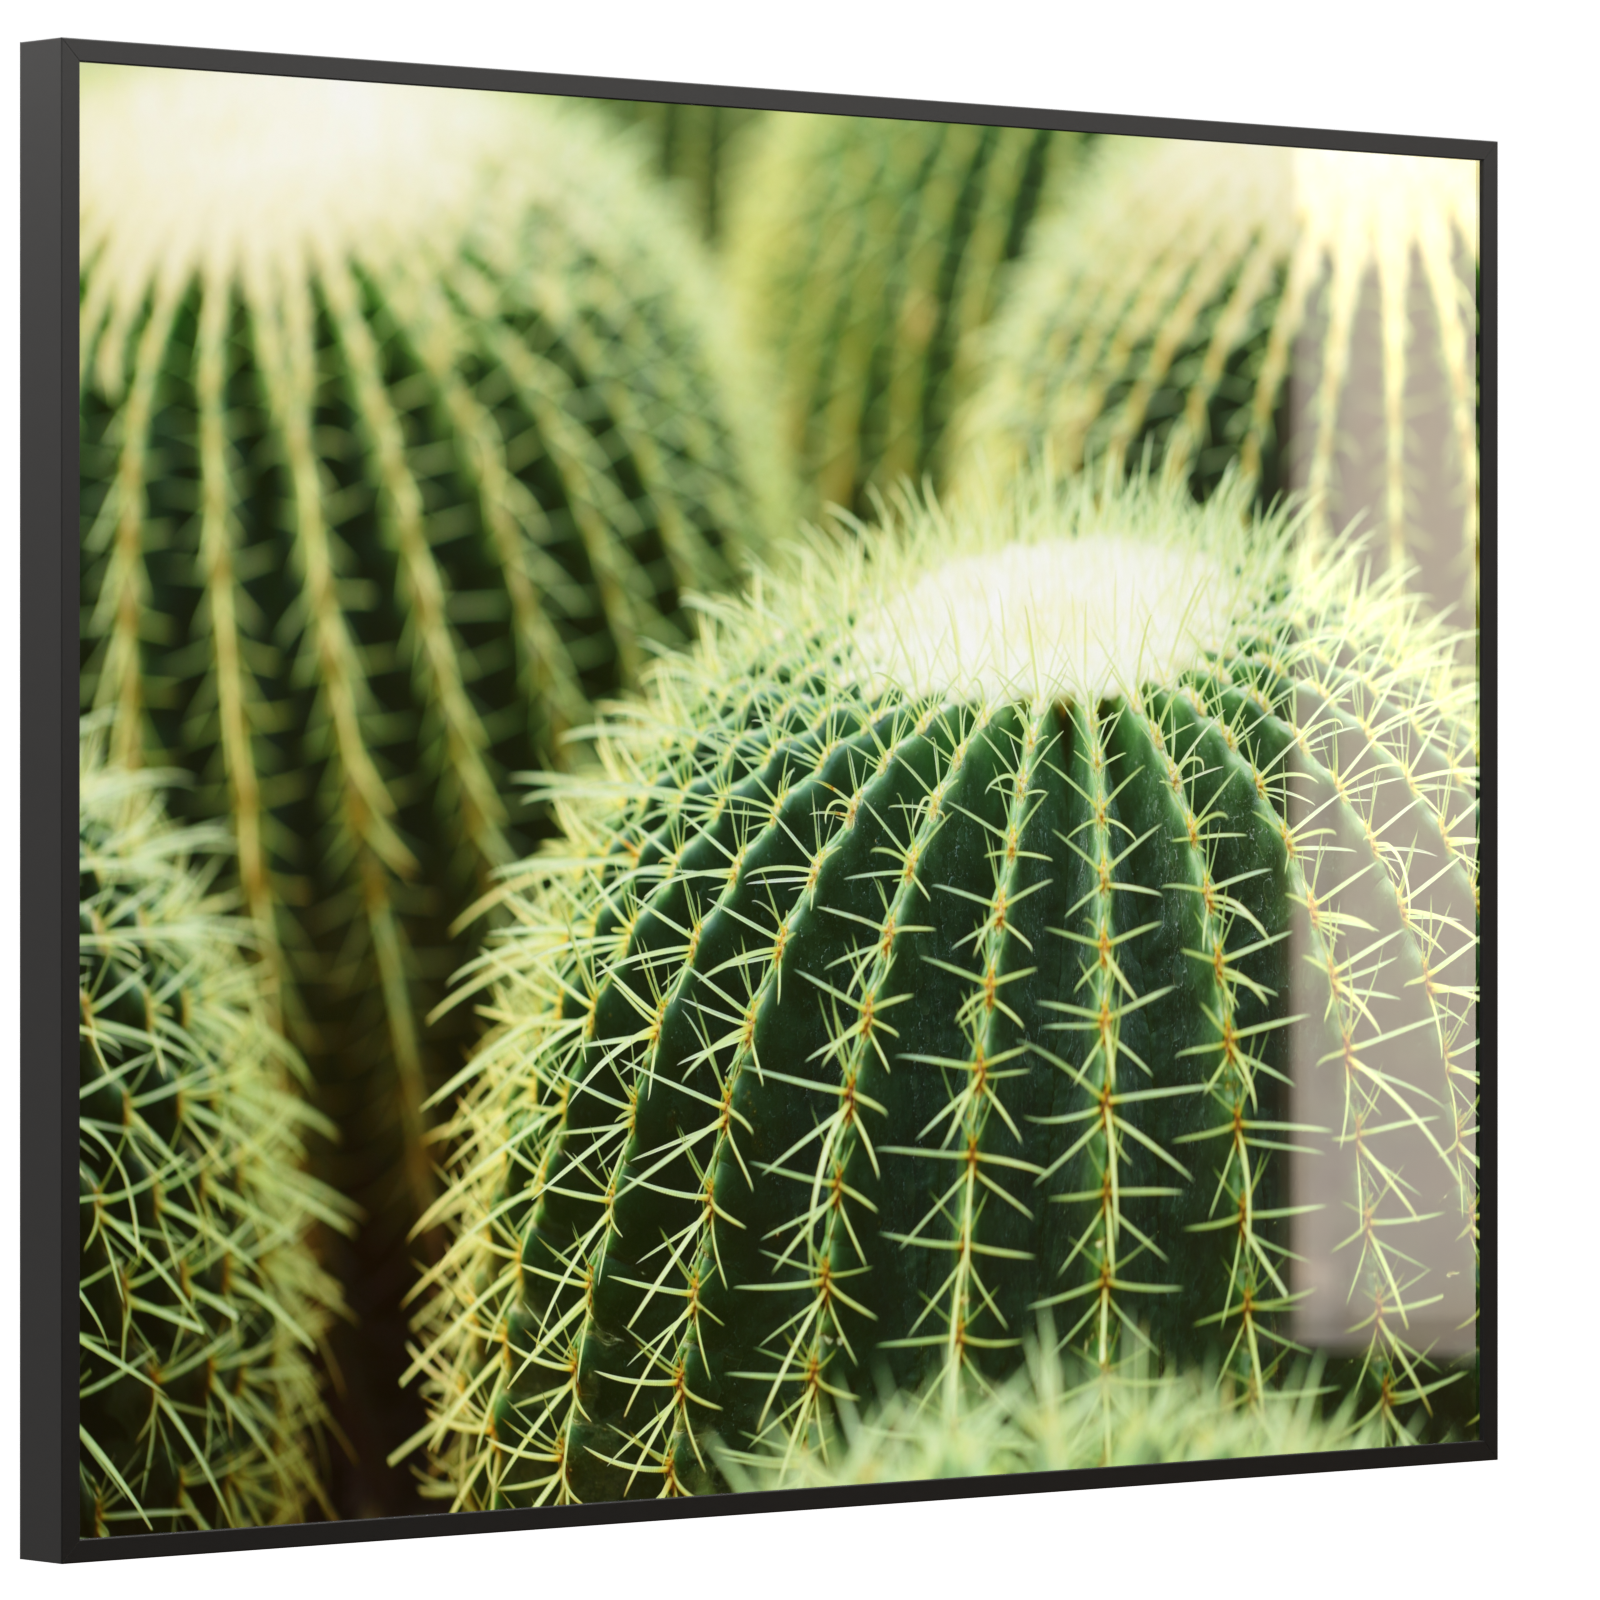 Deko Glas Wandbild Motiv 035 Kaktus